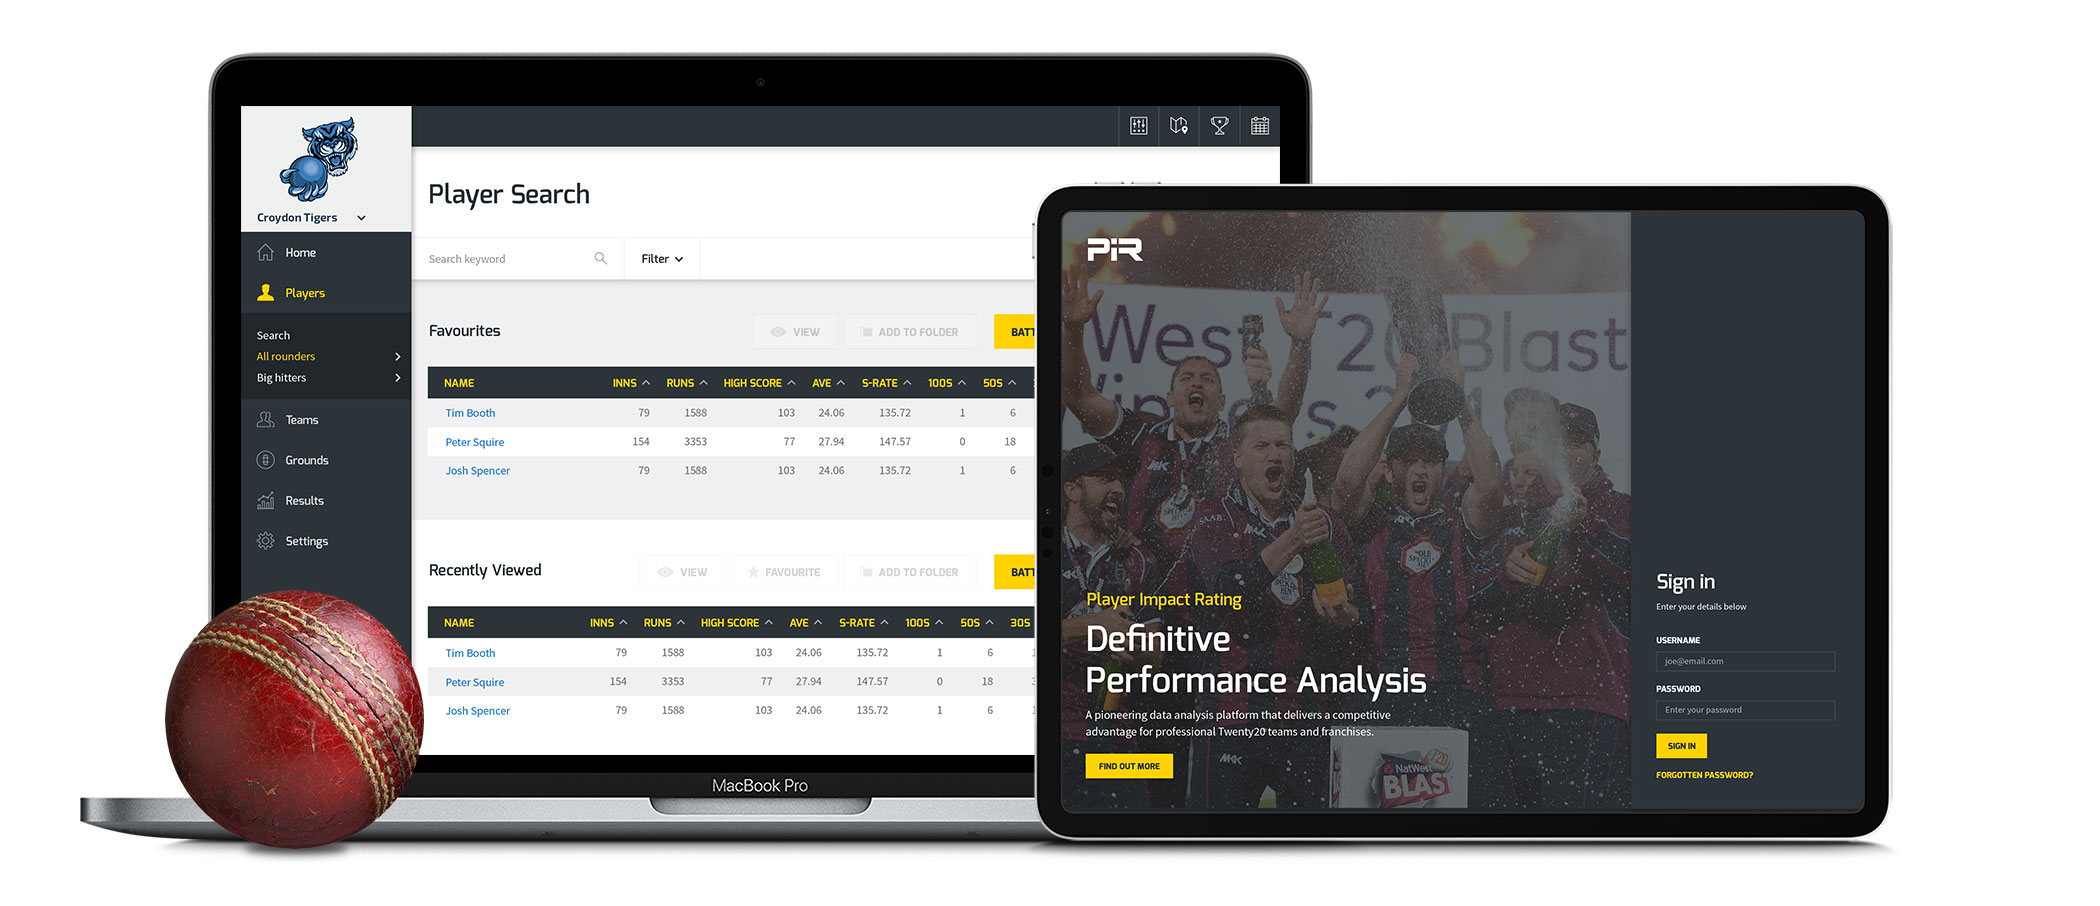 Cricket sports analytics software user interface. UI design on desktop